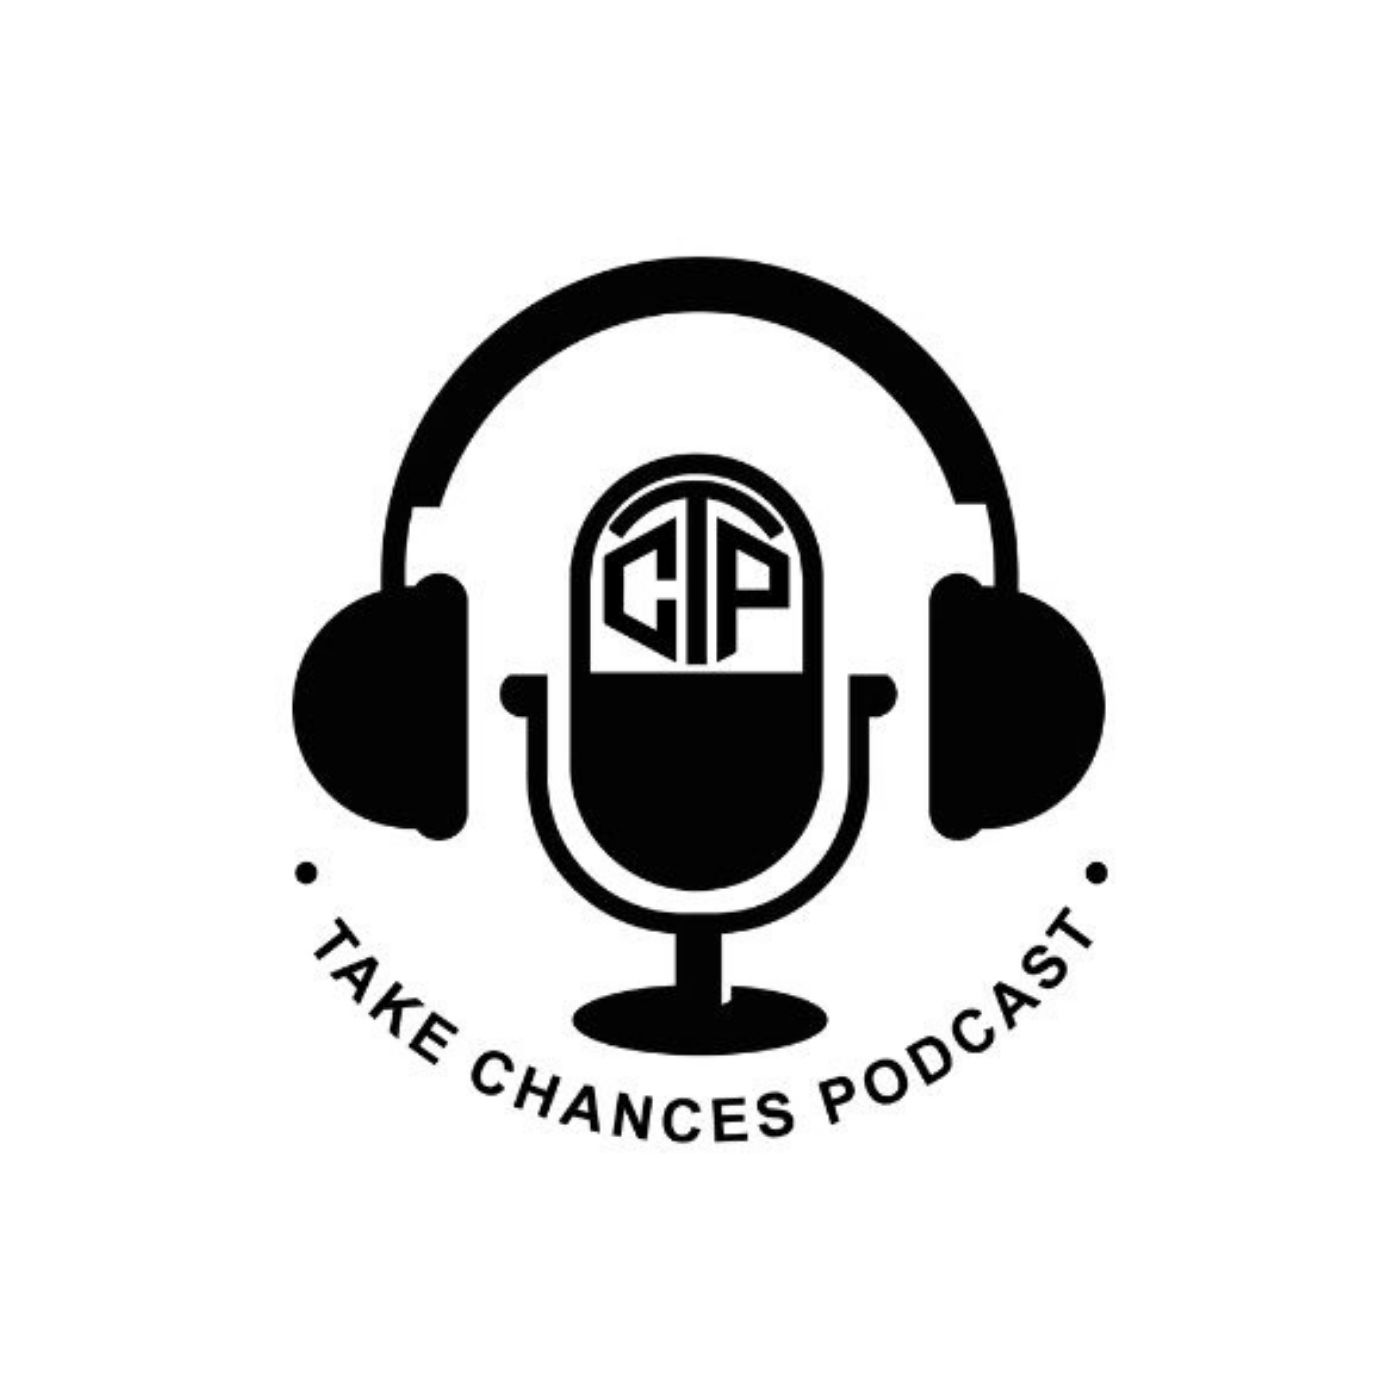 Artwork for Take Chances Podcast